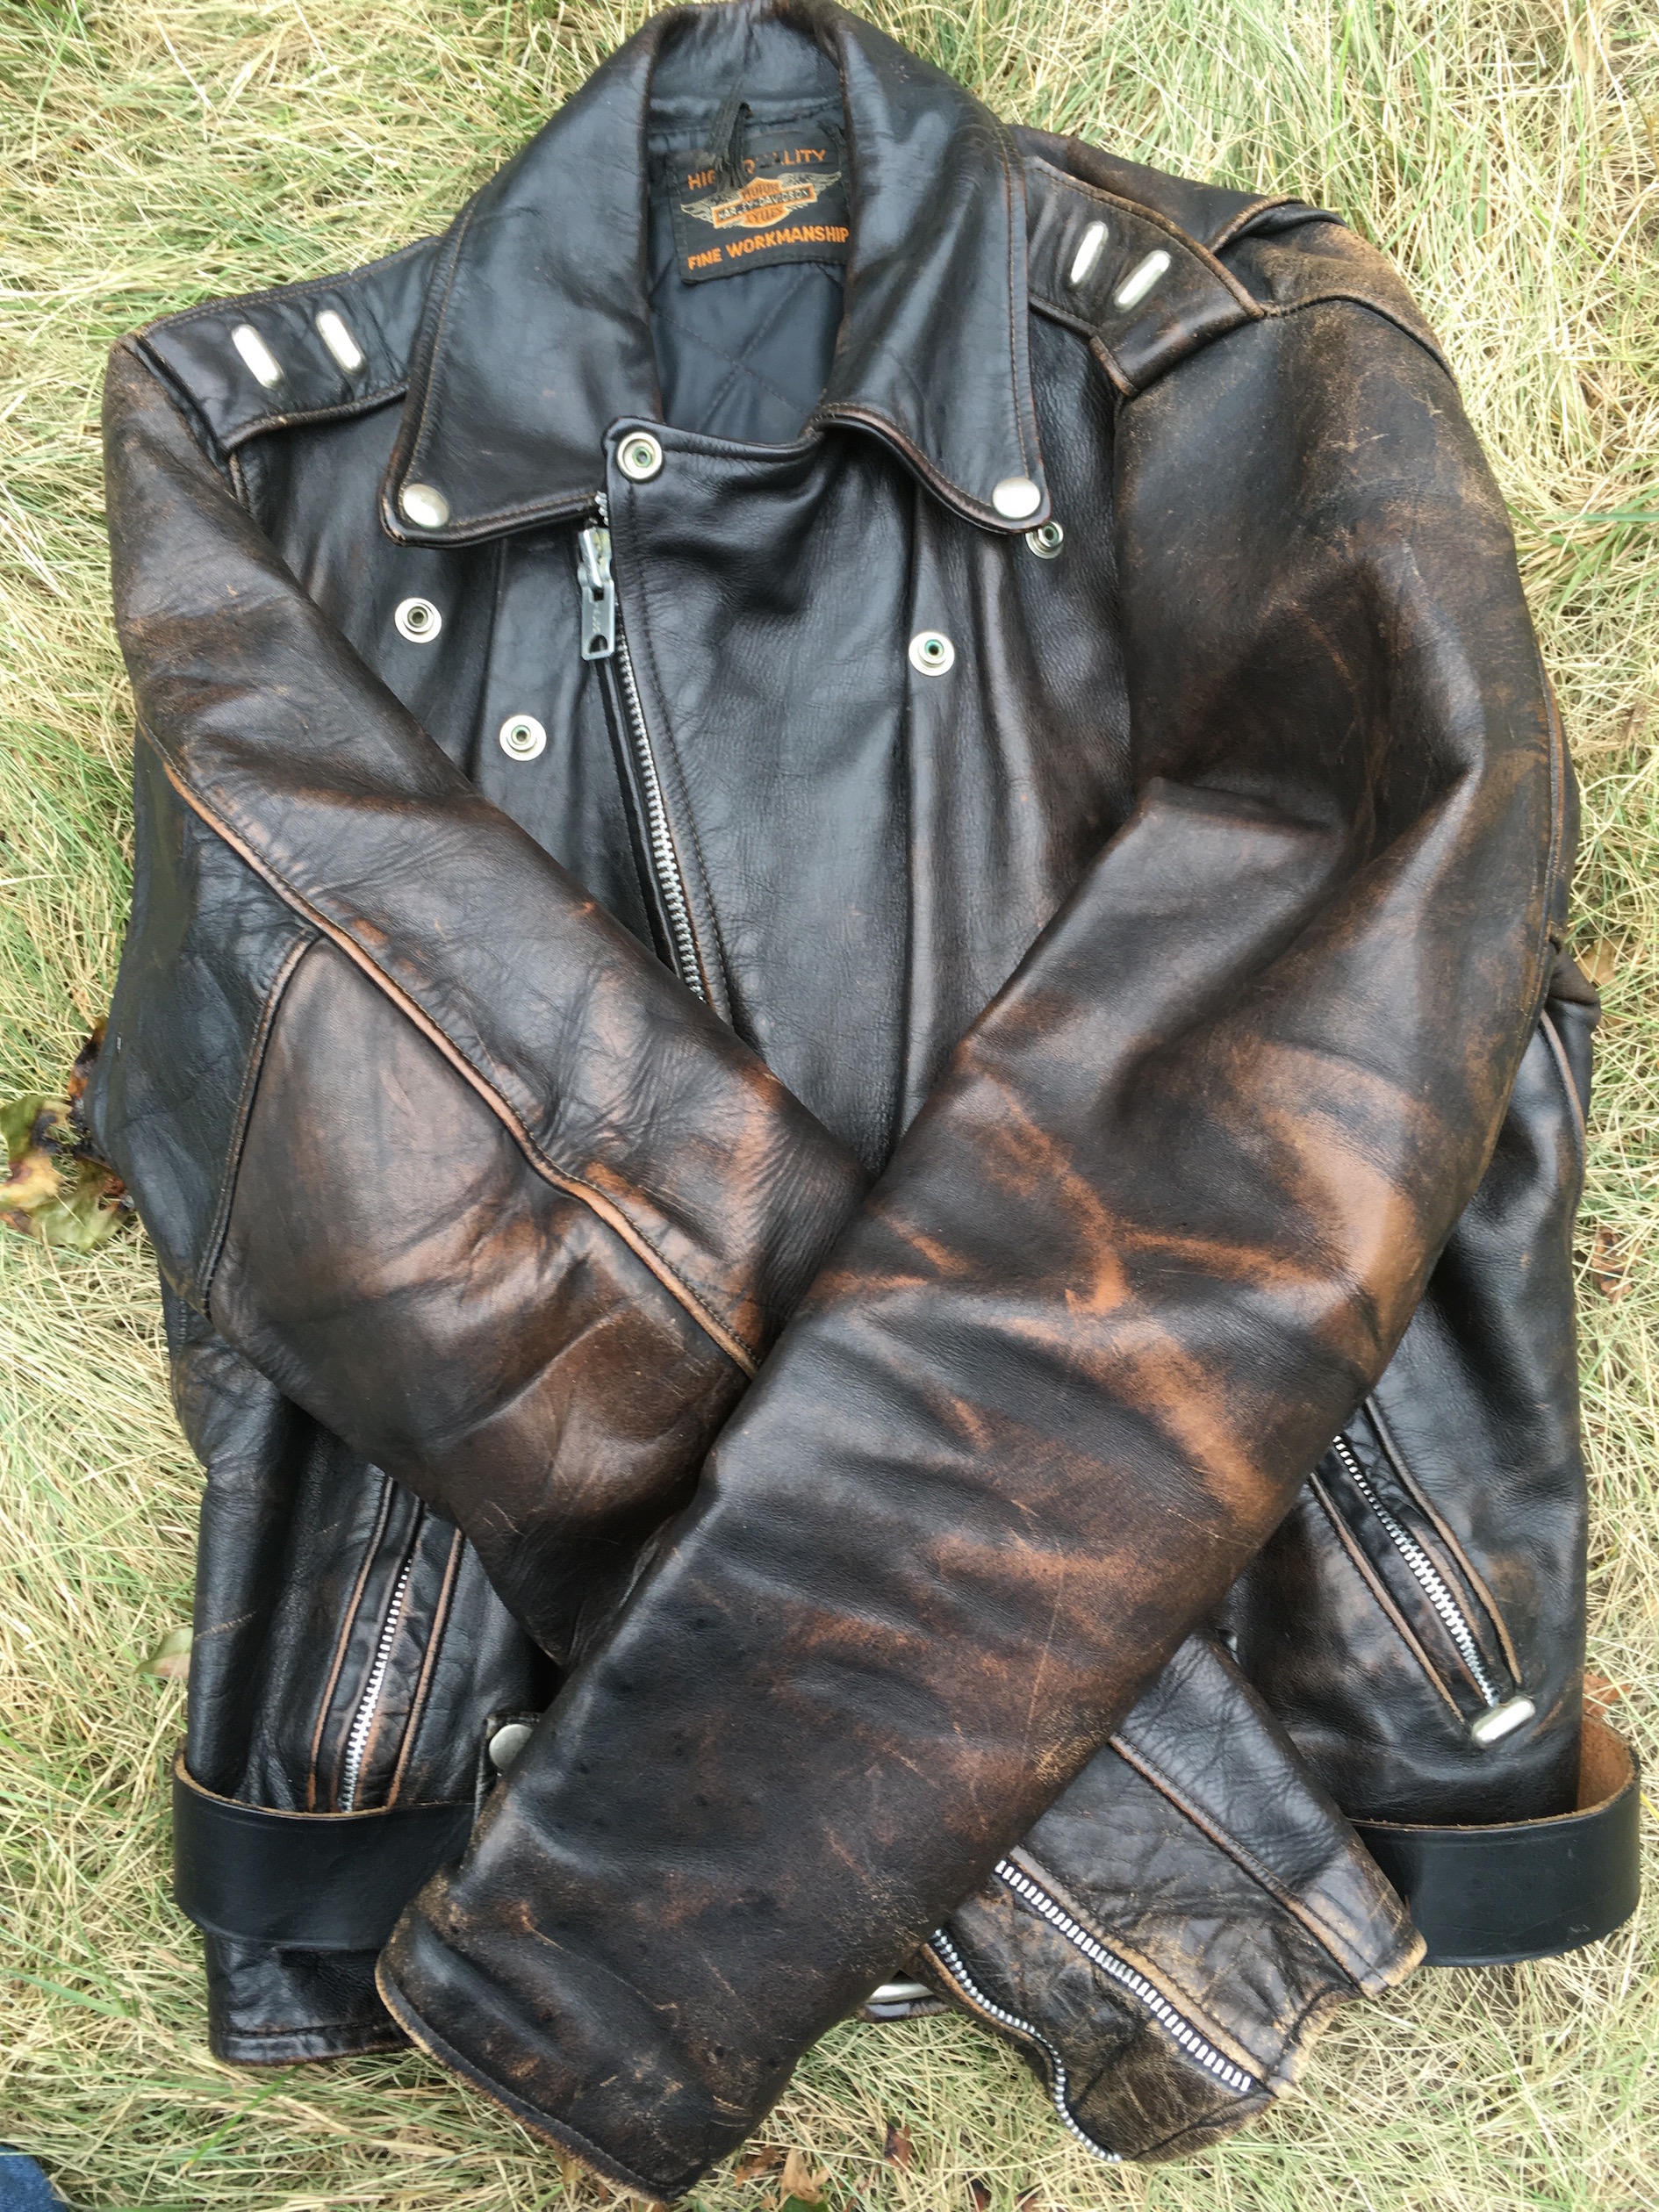 Aged Black Leather 